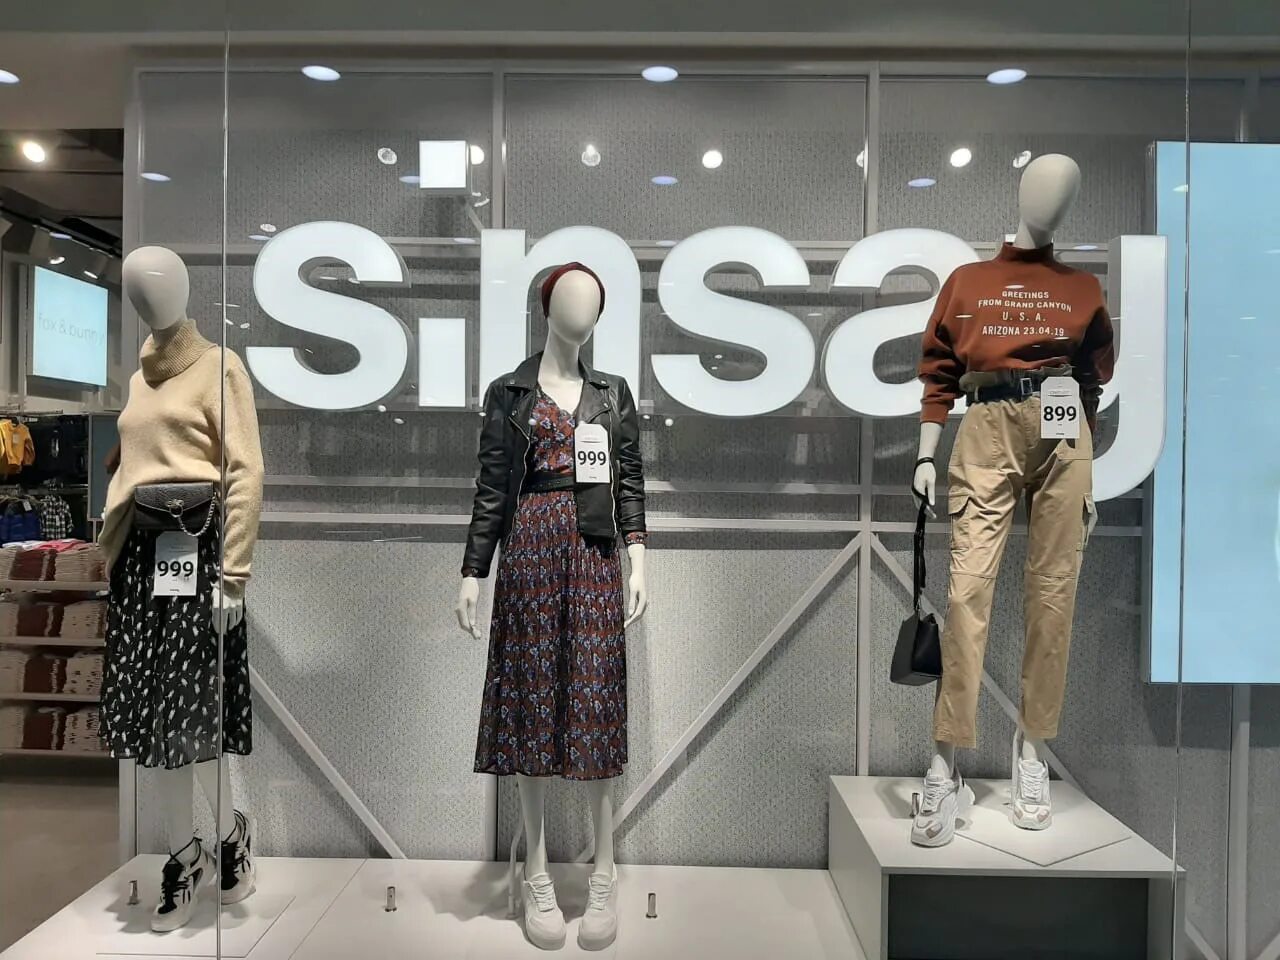 Сенсей магазин одежды. Бренд одежды Sinsay. Sinsay витрины. Sensei одежда интернет магазин. Синсэй интернет магазин